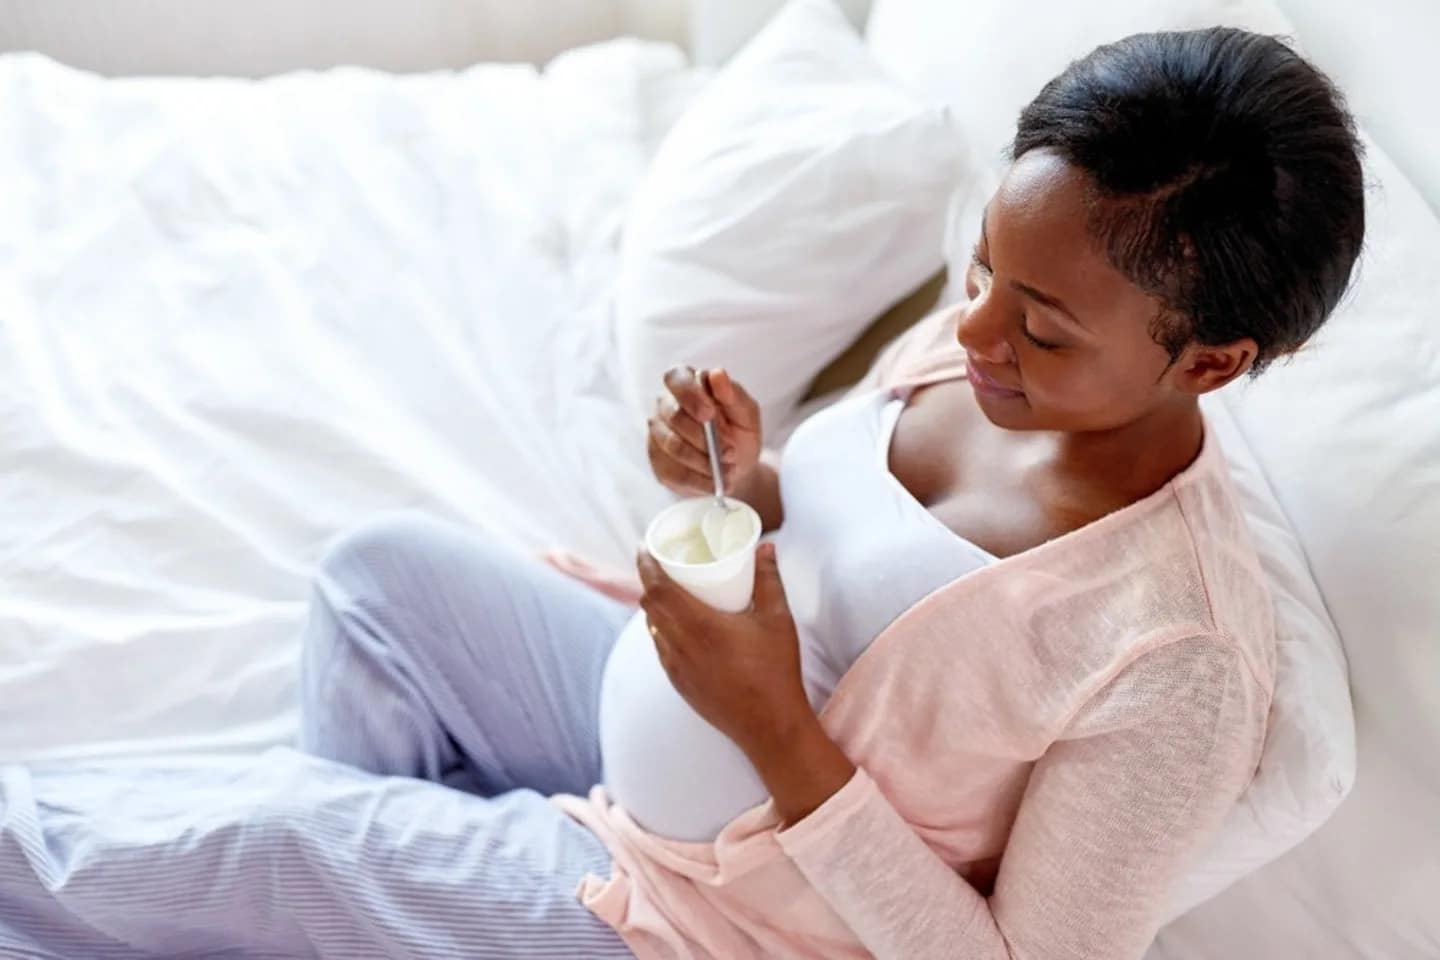 probiotics in pregnancy: pregnant woman eating yogurt